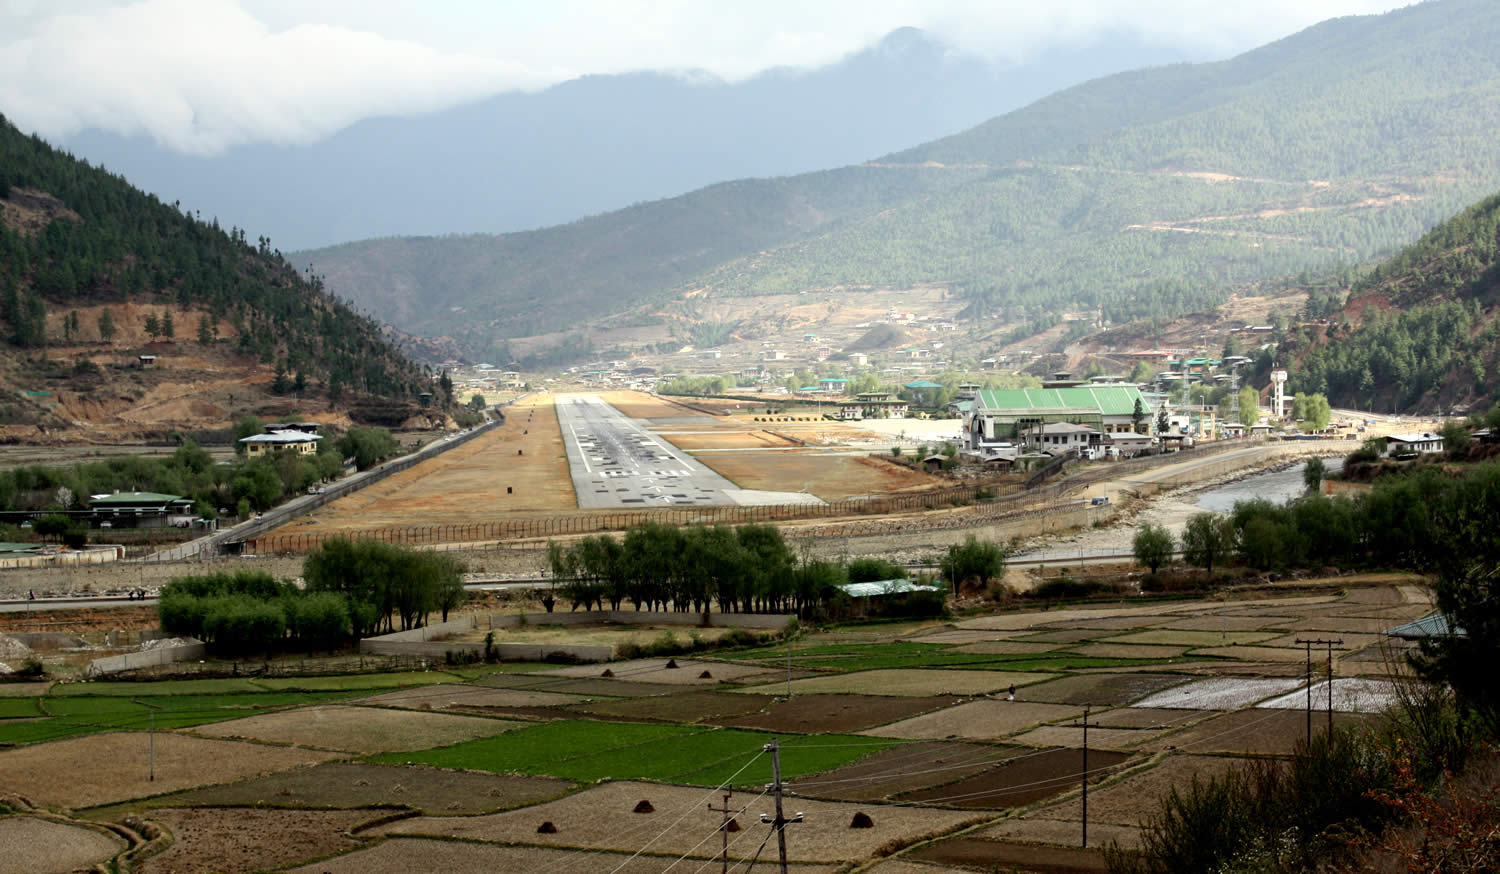 View of the runway at Paro airport.